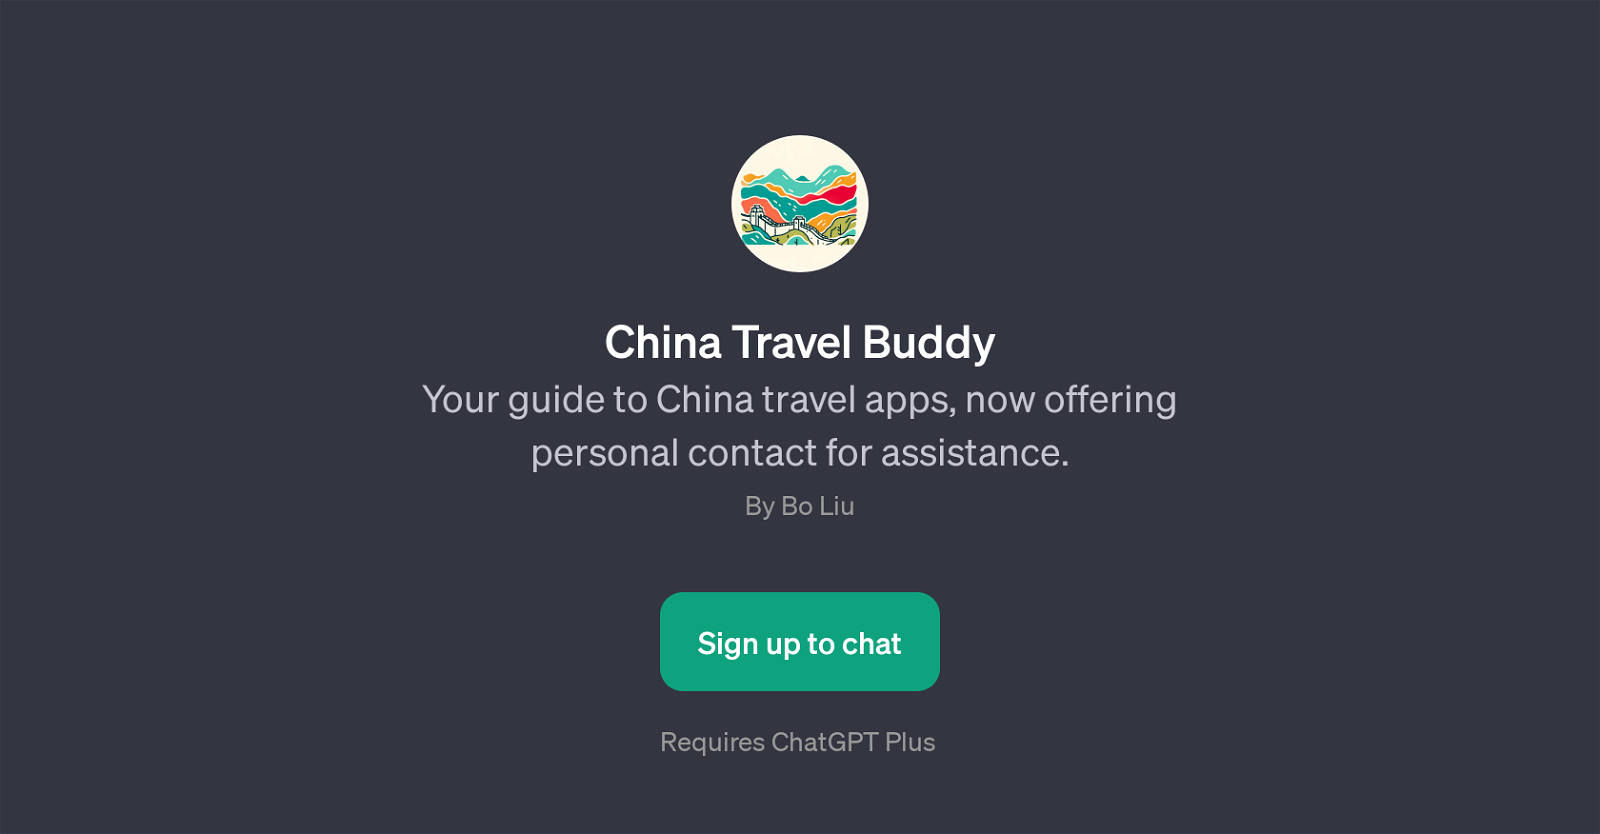 China Travel Buddy website